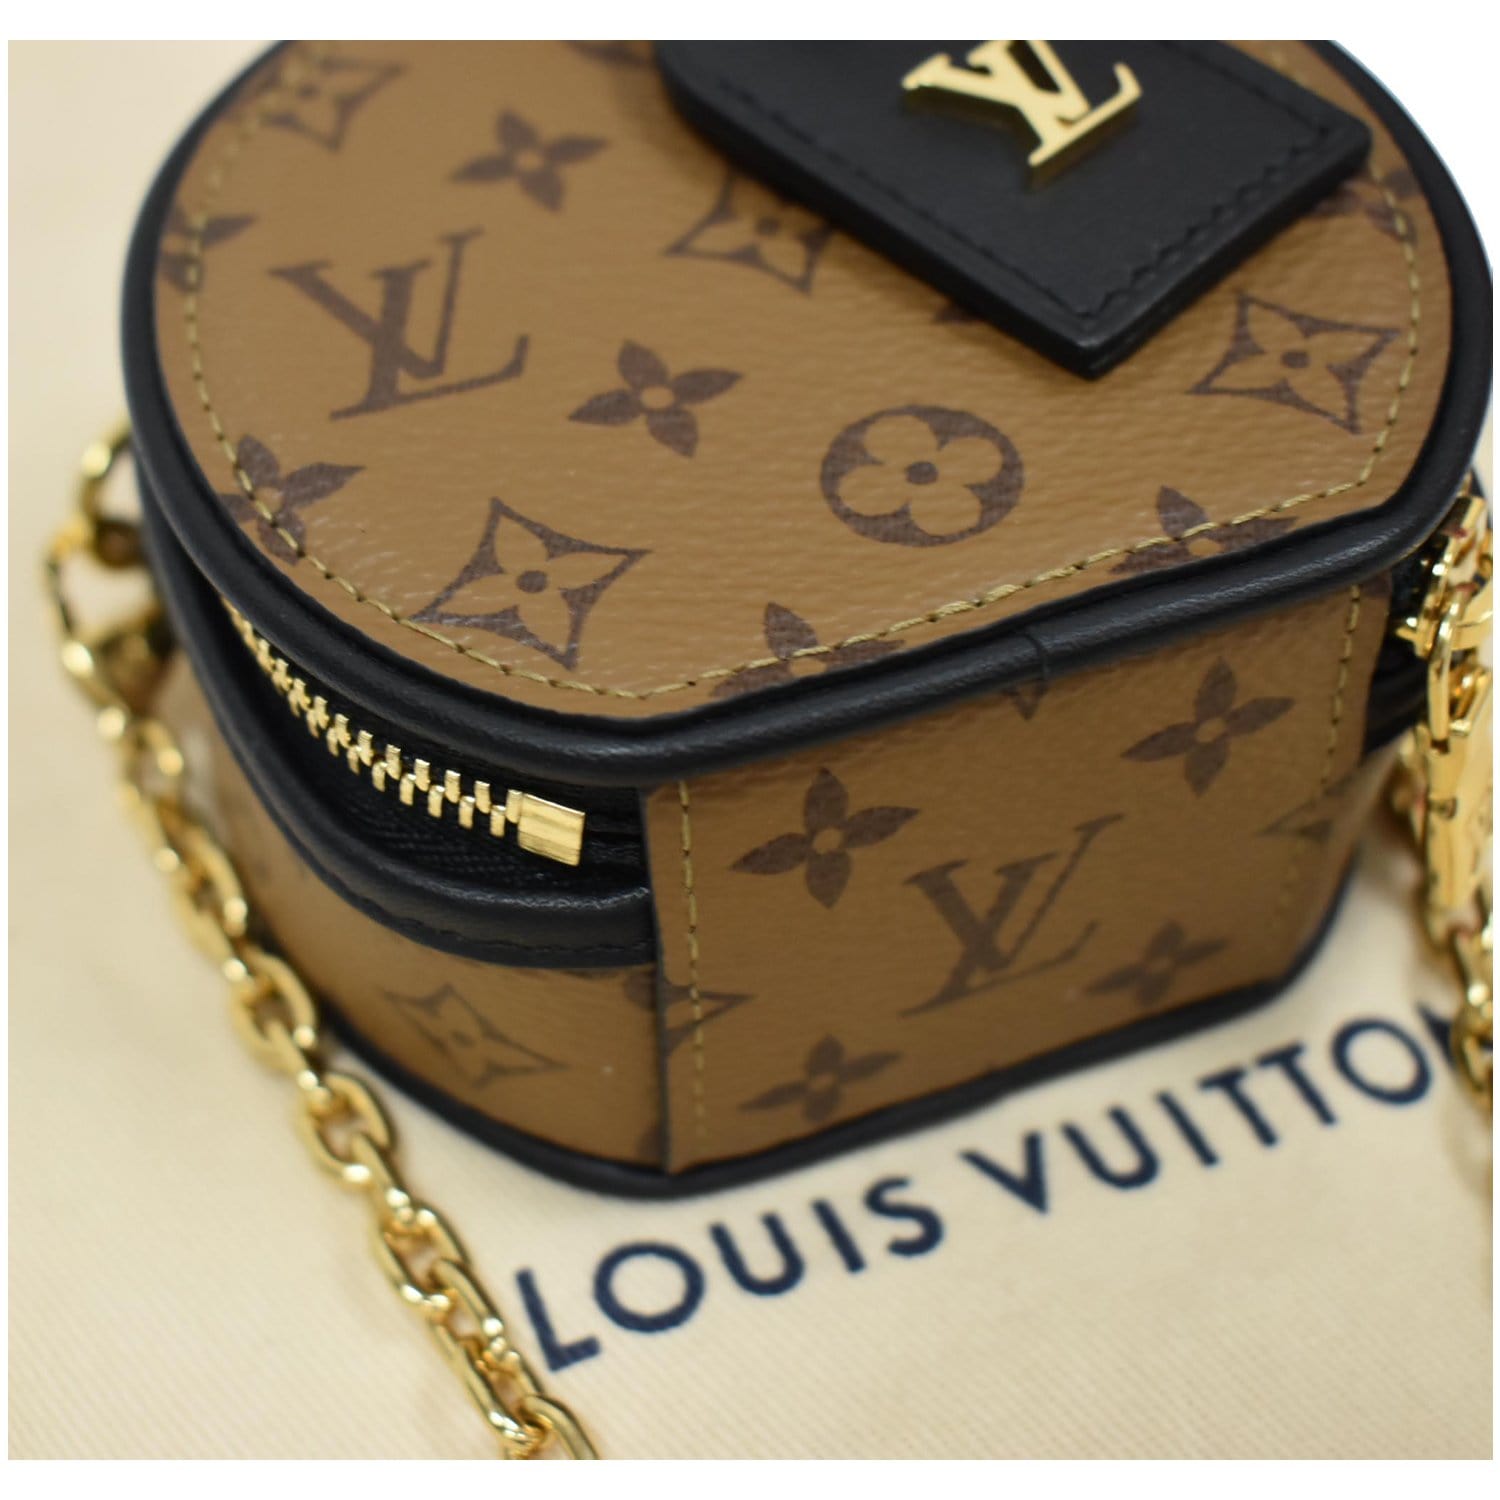 AirPod Case Louis Vuitton 